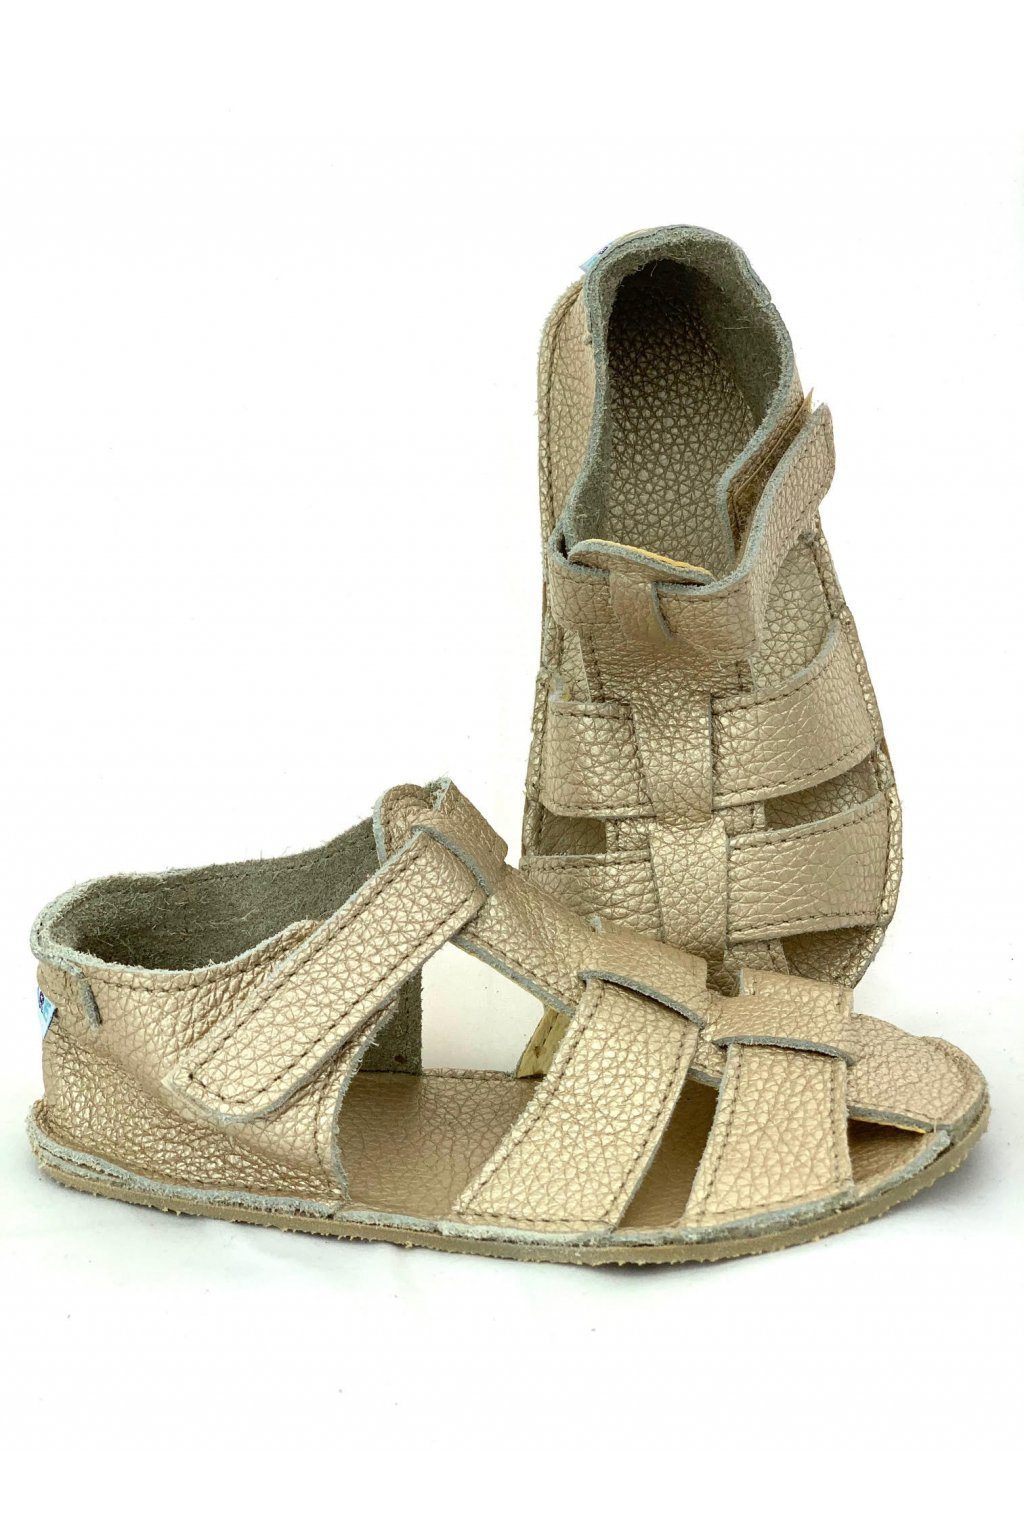 Baby Bare Shimmer Gold sandals - Mugavik Barefoot